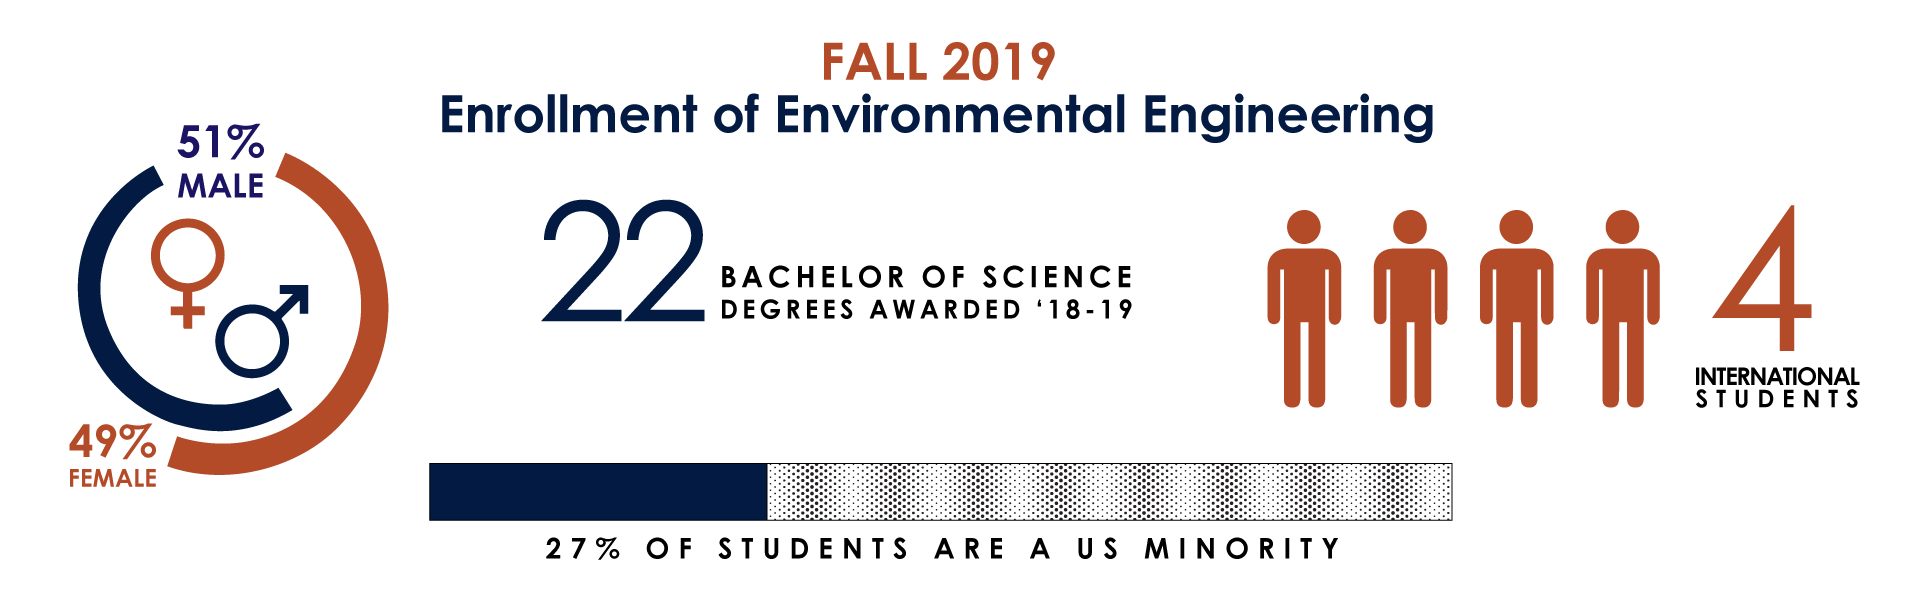 Fall 2019 - Enrollment of Environmental Engineering